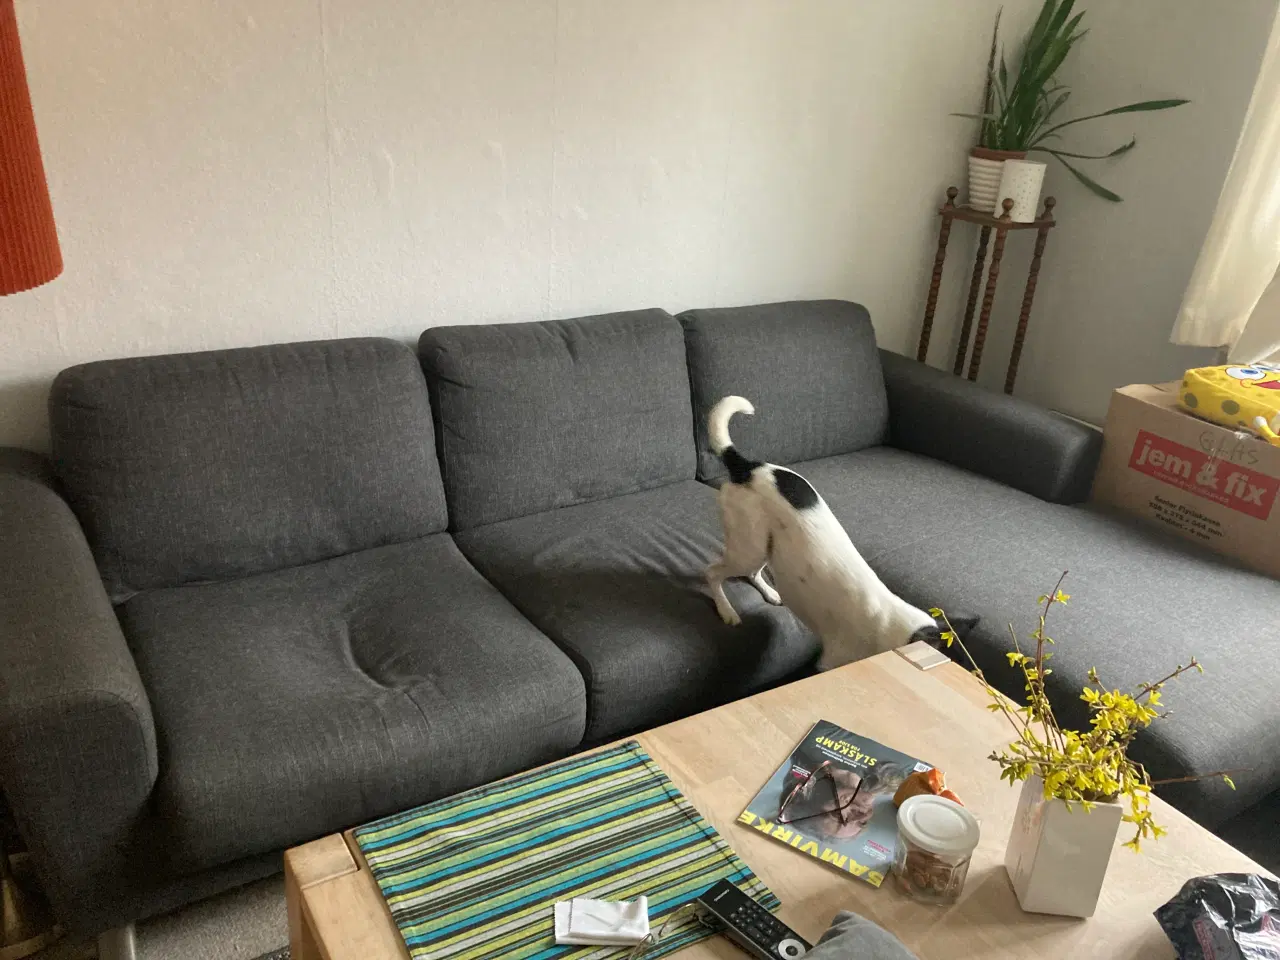 Billede 1 - Sofa med chaiselong